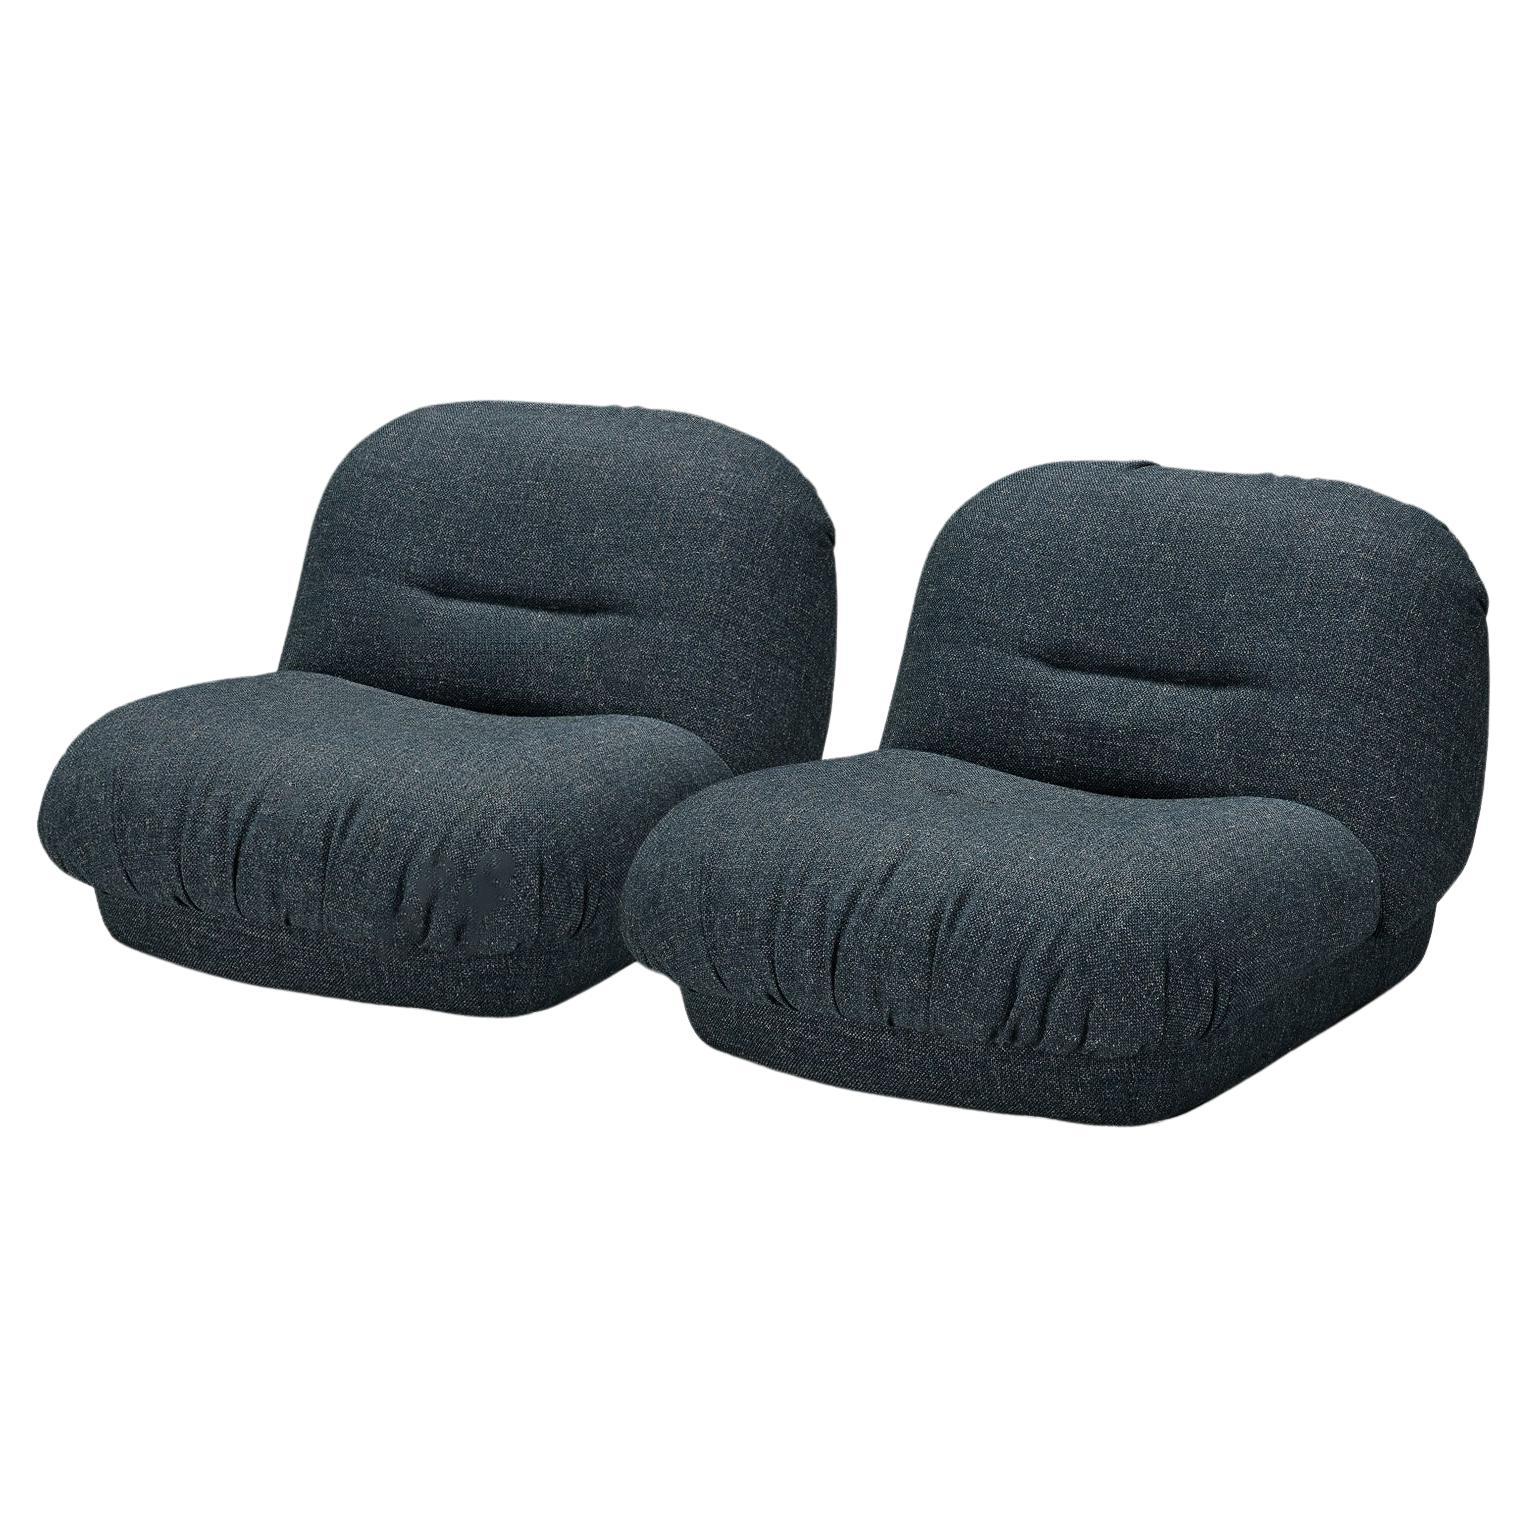 Alberto Rosselli for Saporiti 'Maxijumbo' Lounge Chairs  For Sale